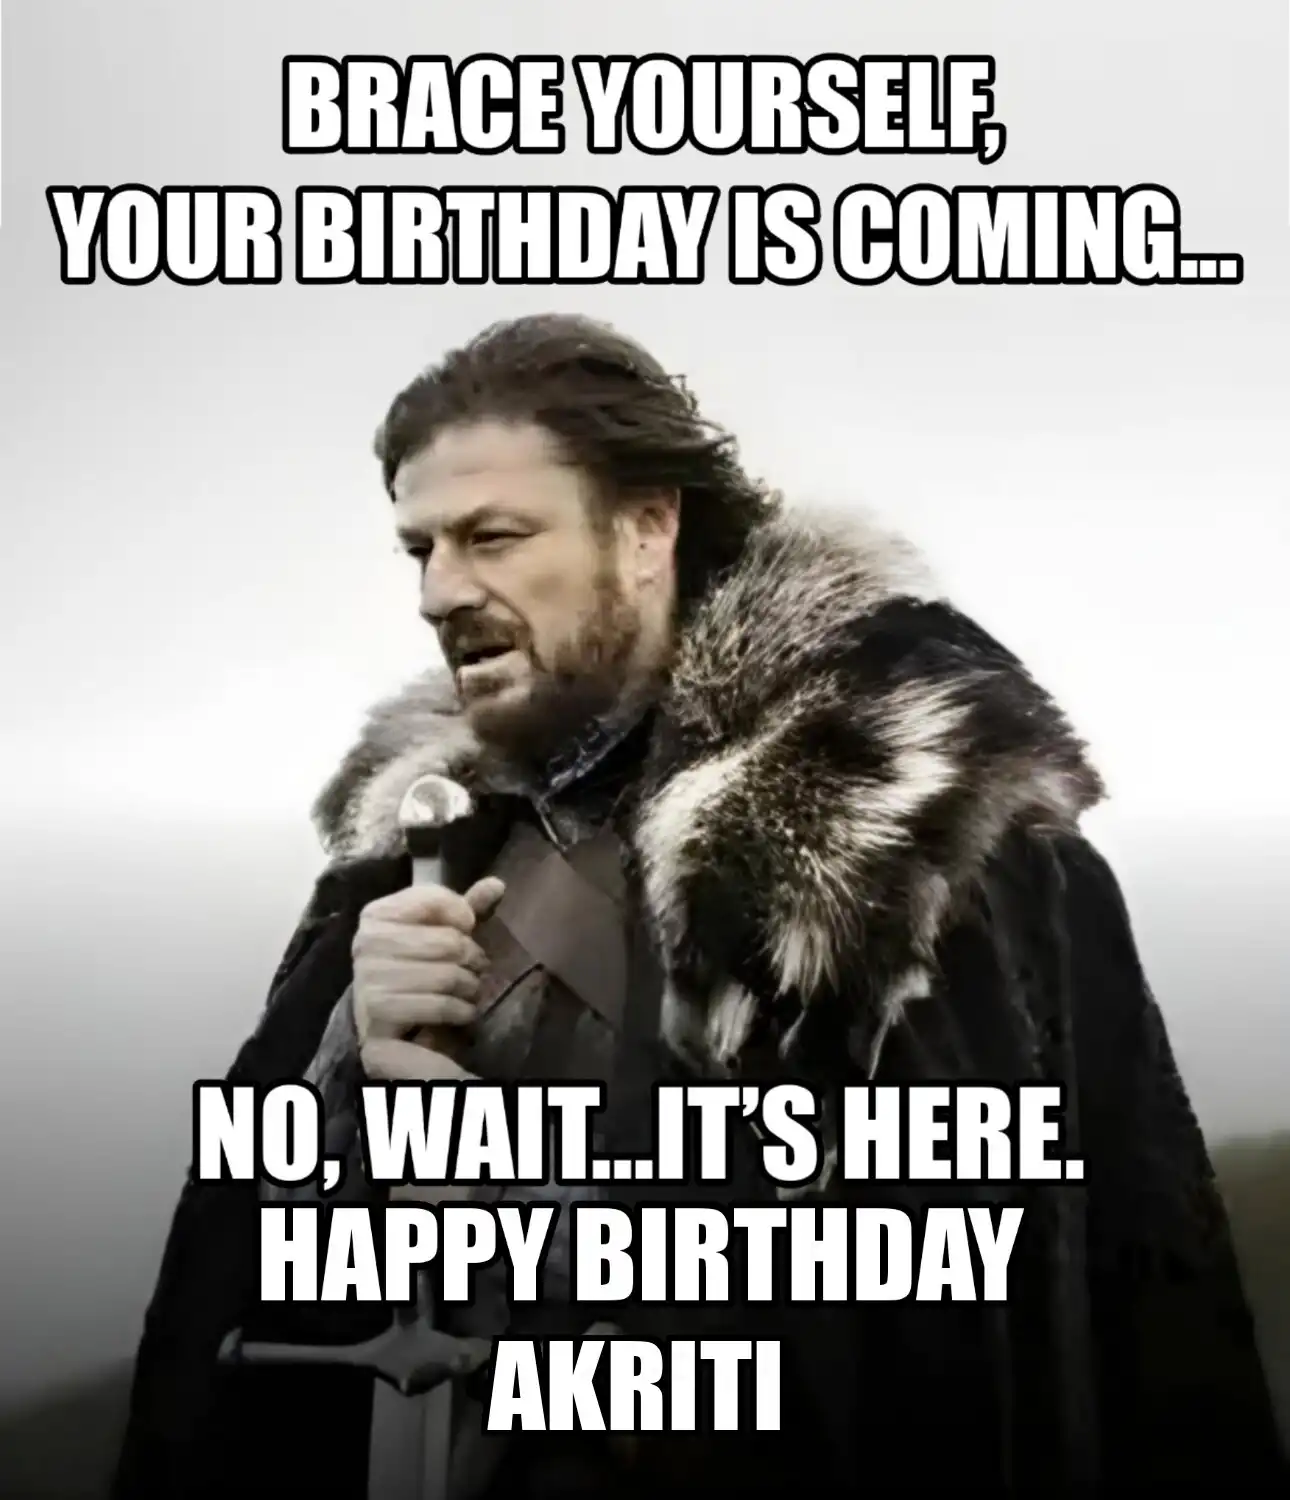 Happy Birthday Akriti Brace Yourself Your Birthday Is Coming Meme